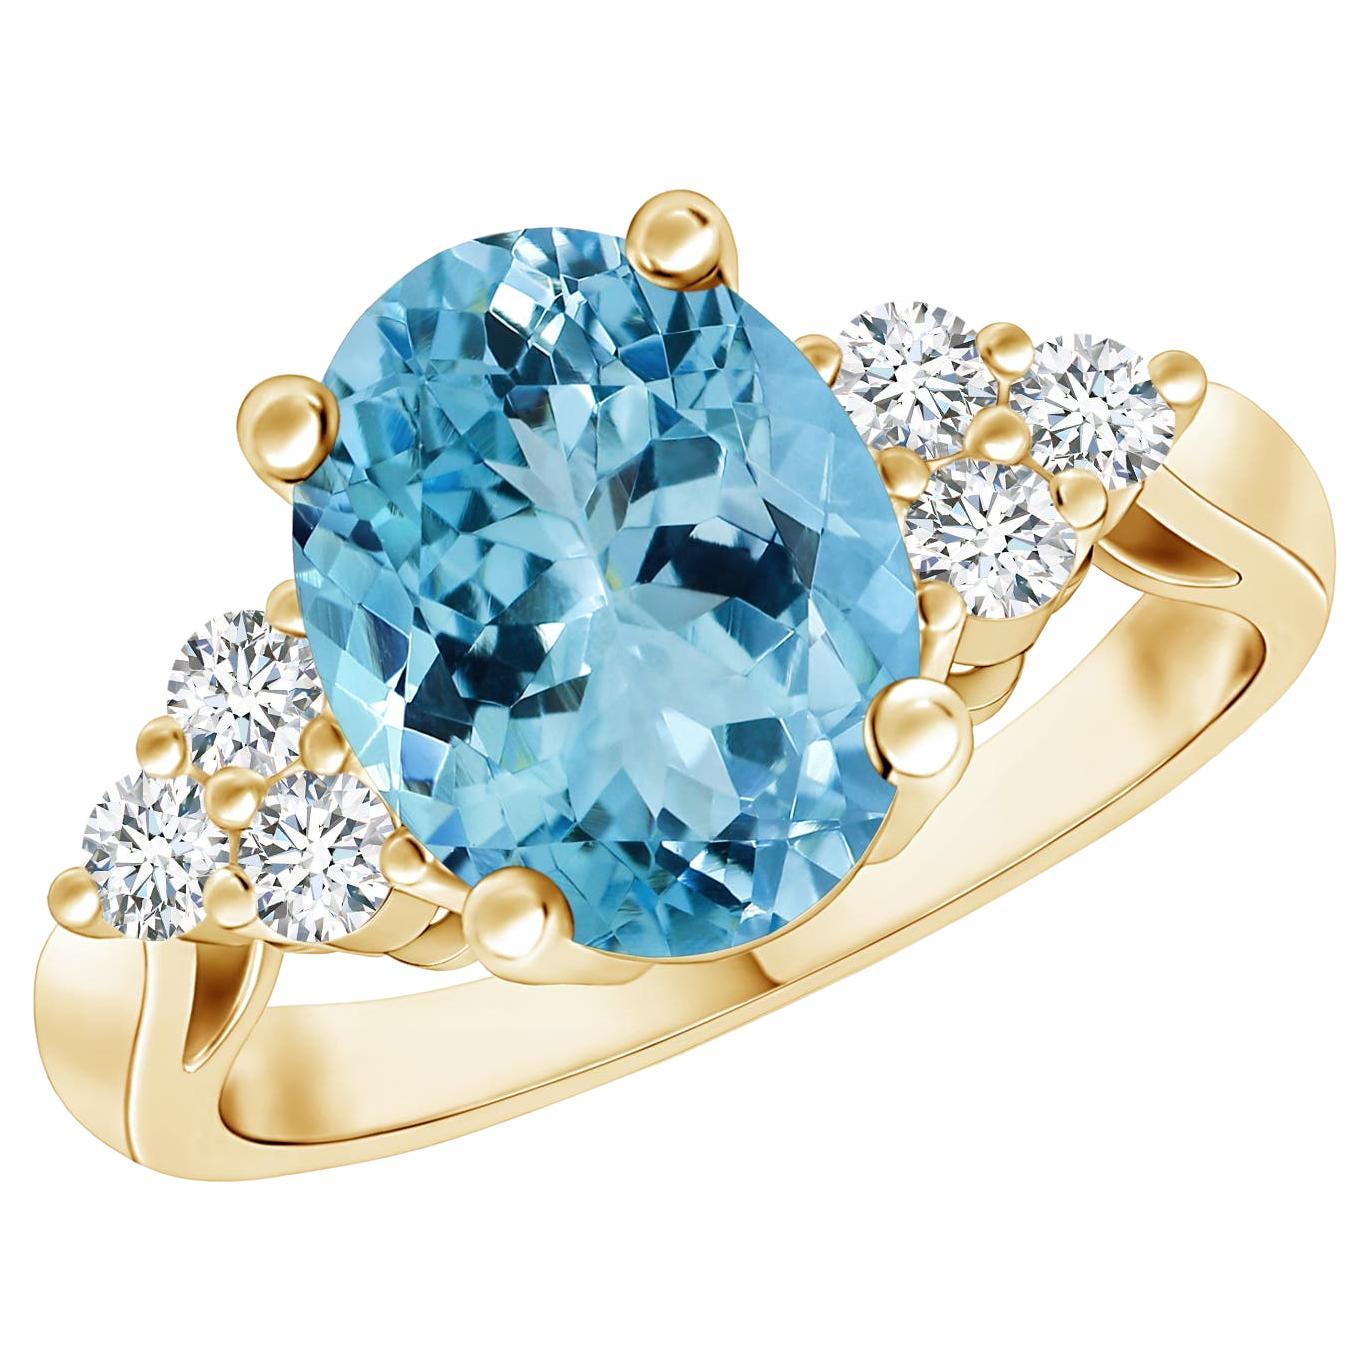 For Sale:  Angara GIA Certified Natural Aquamarine & Diamond Ring in Yellow Gold